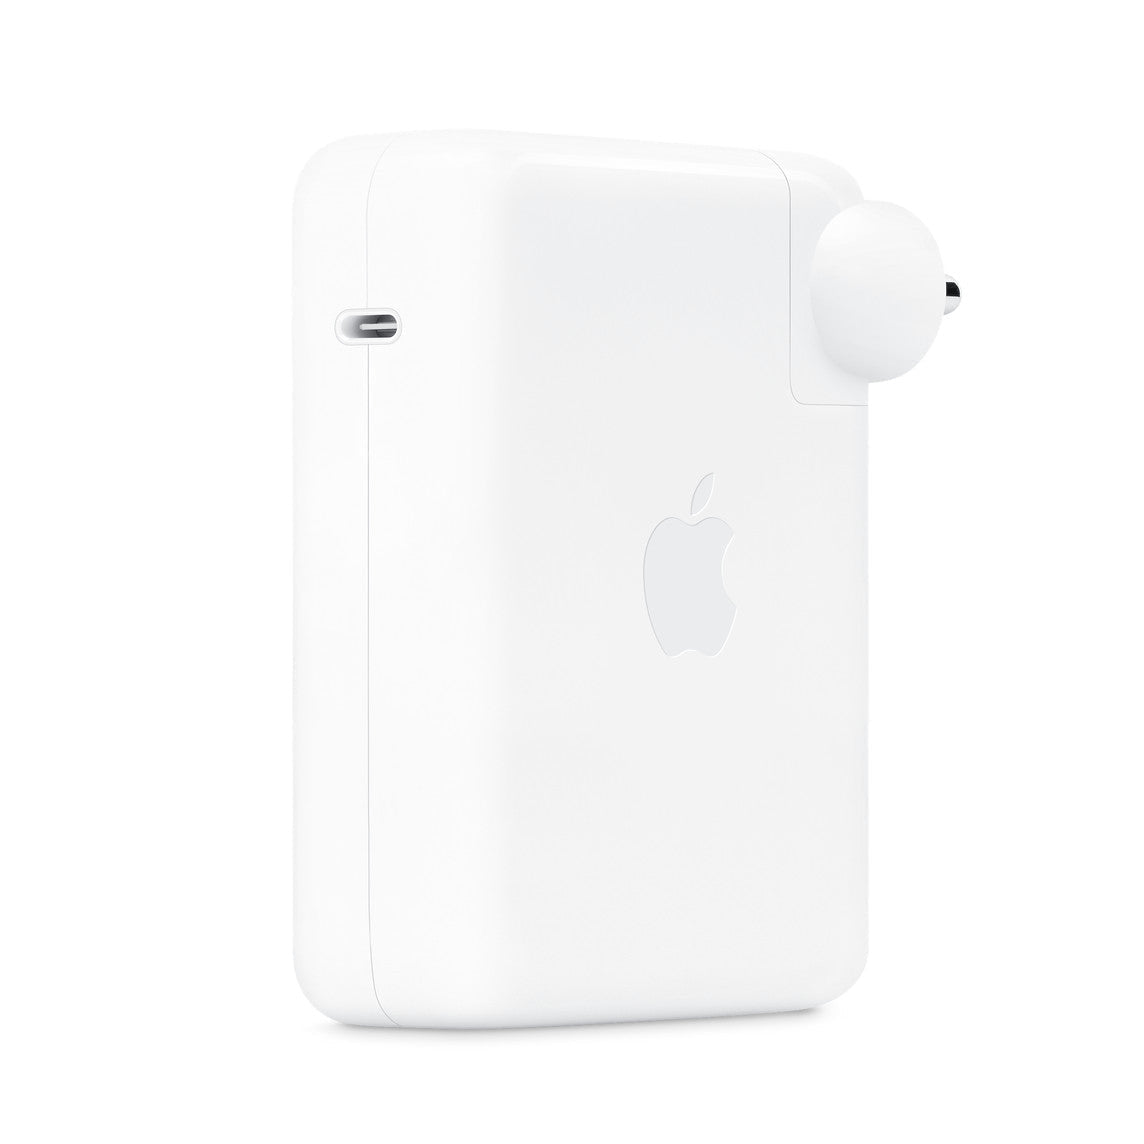 Apple POWER ADAPTER : 140W USB-C